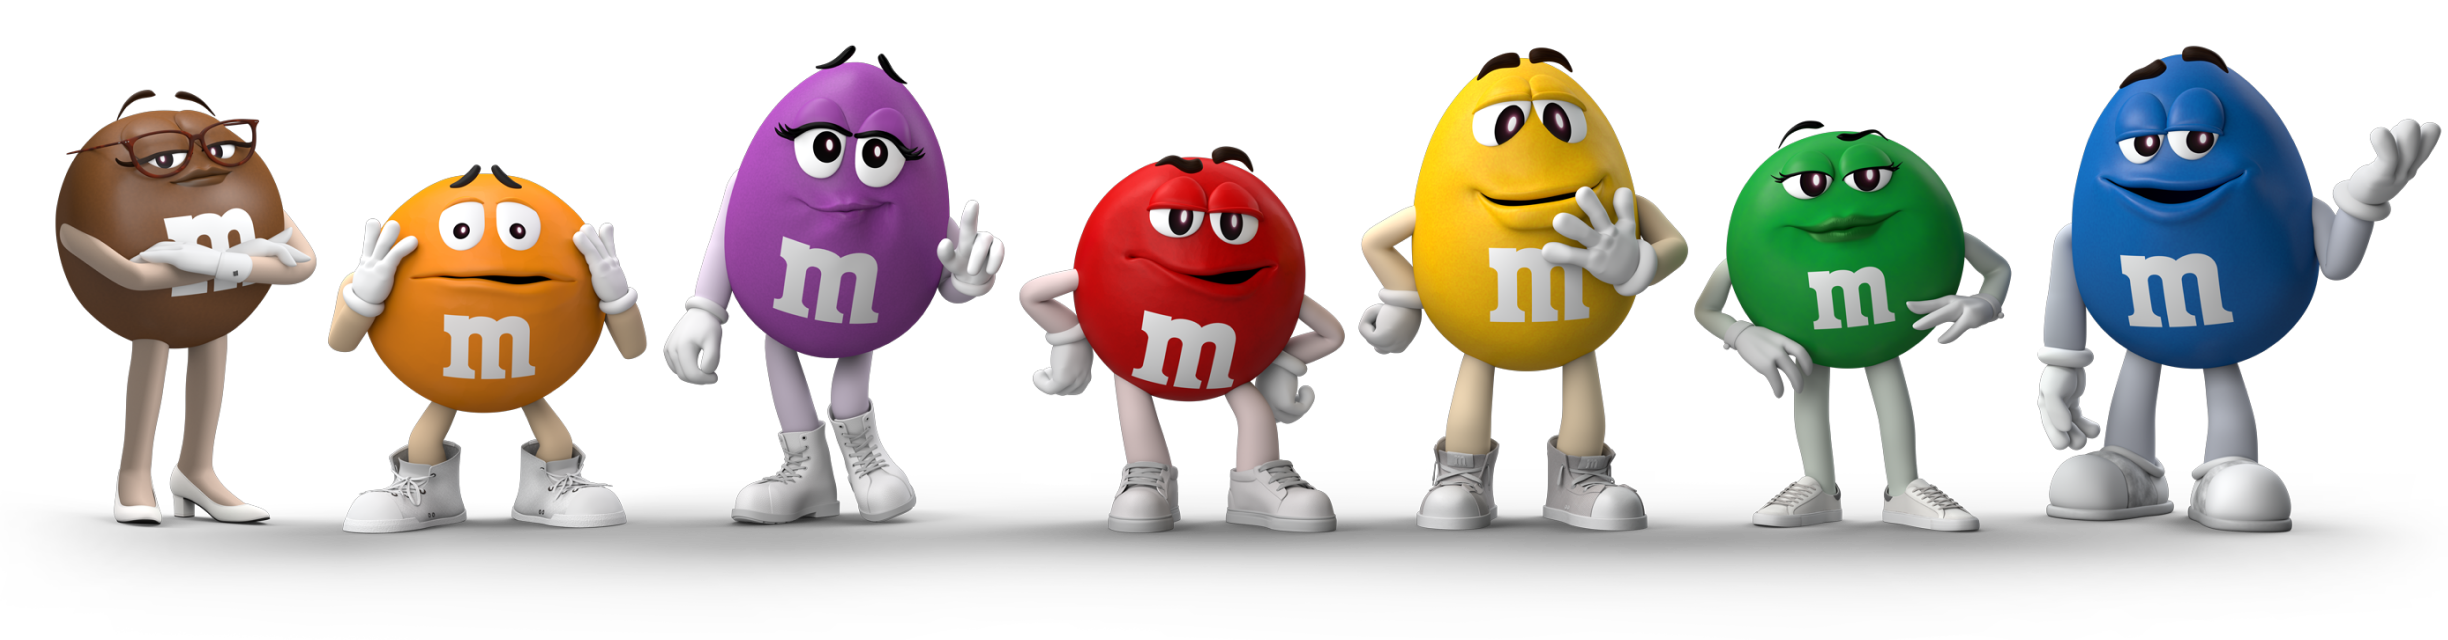 M&M’S Yellow Character Shaped Box